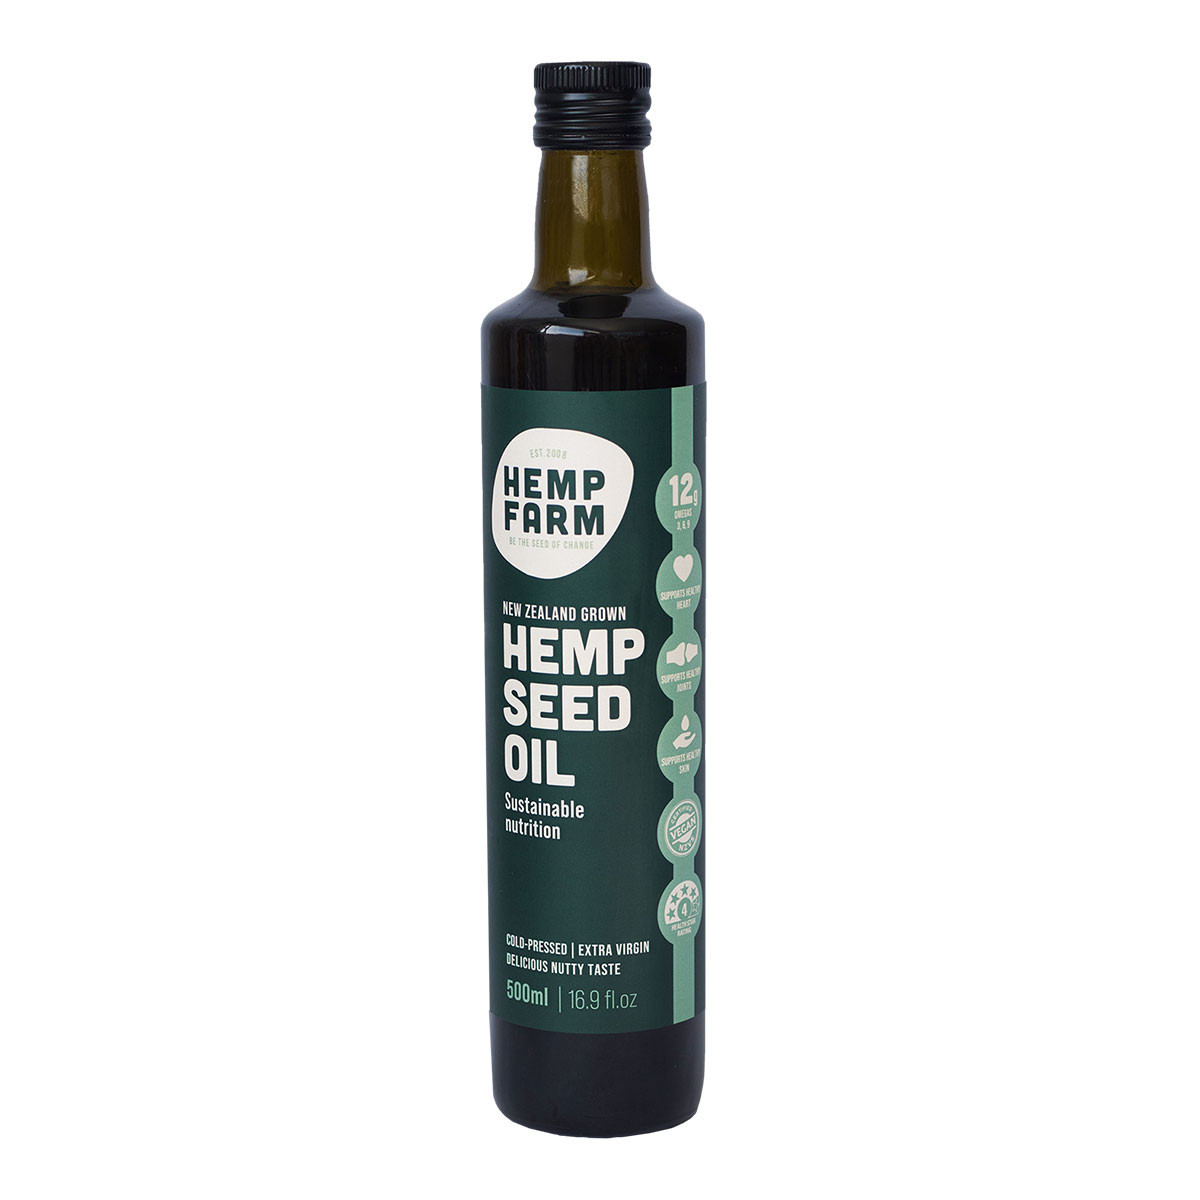 Hemp Farm Hemp Seed Oil 500ml